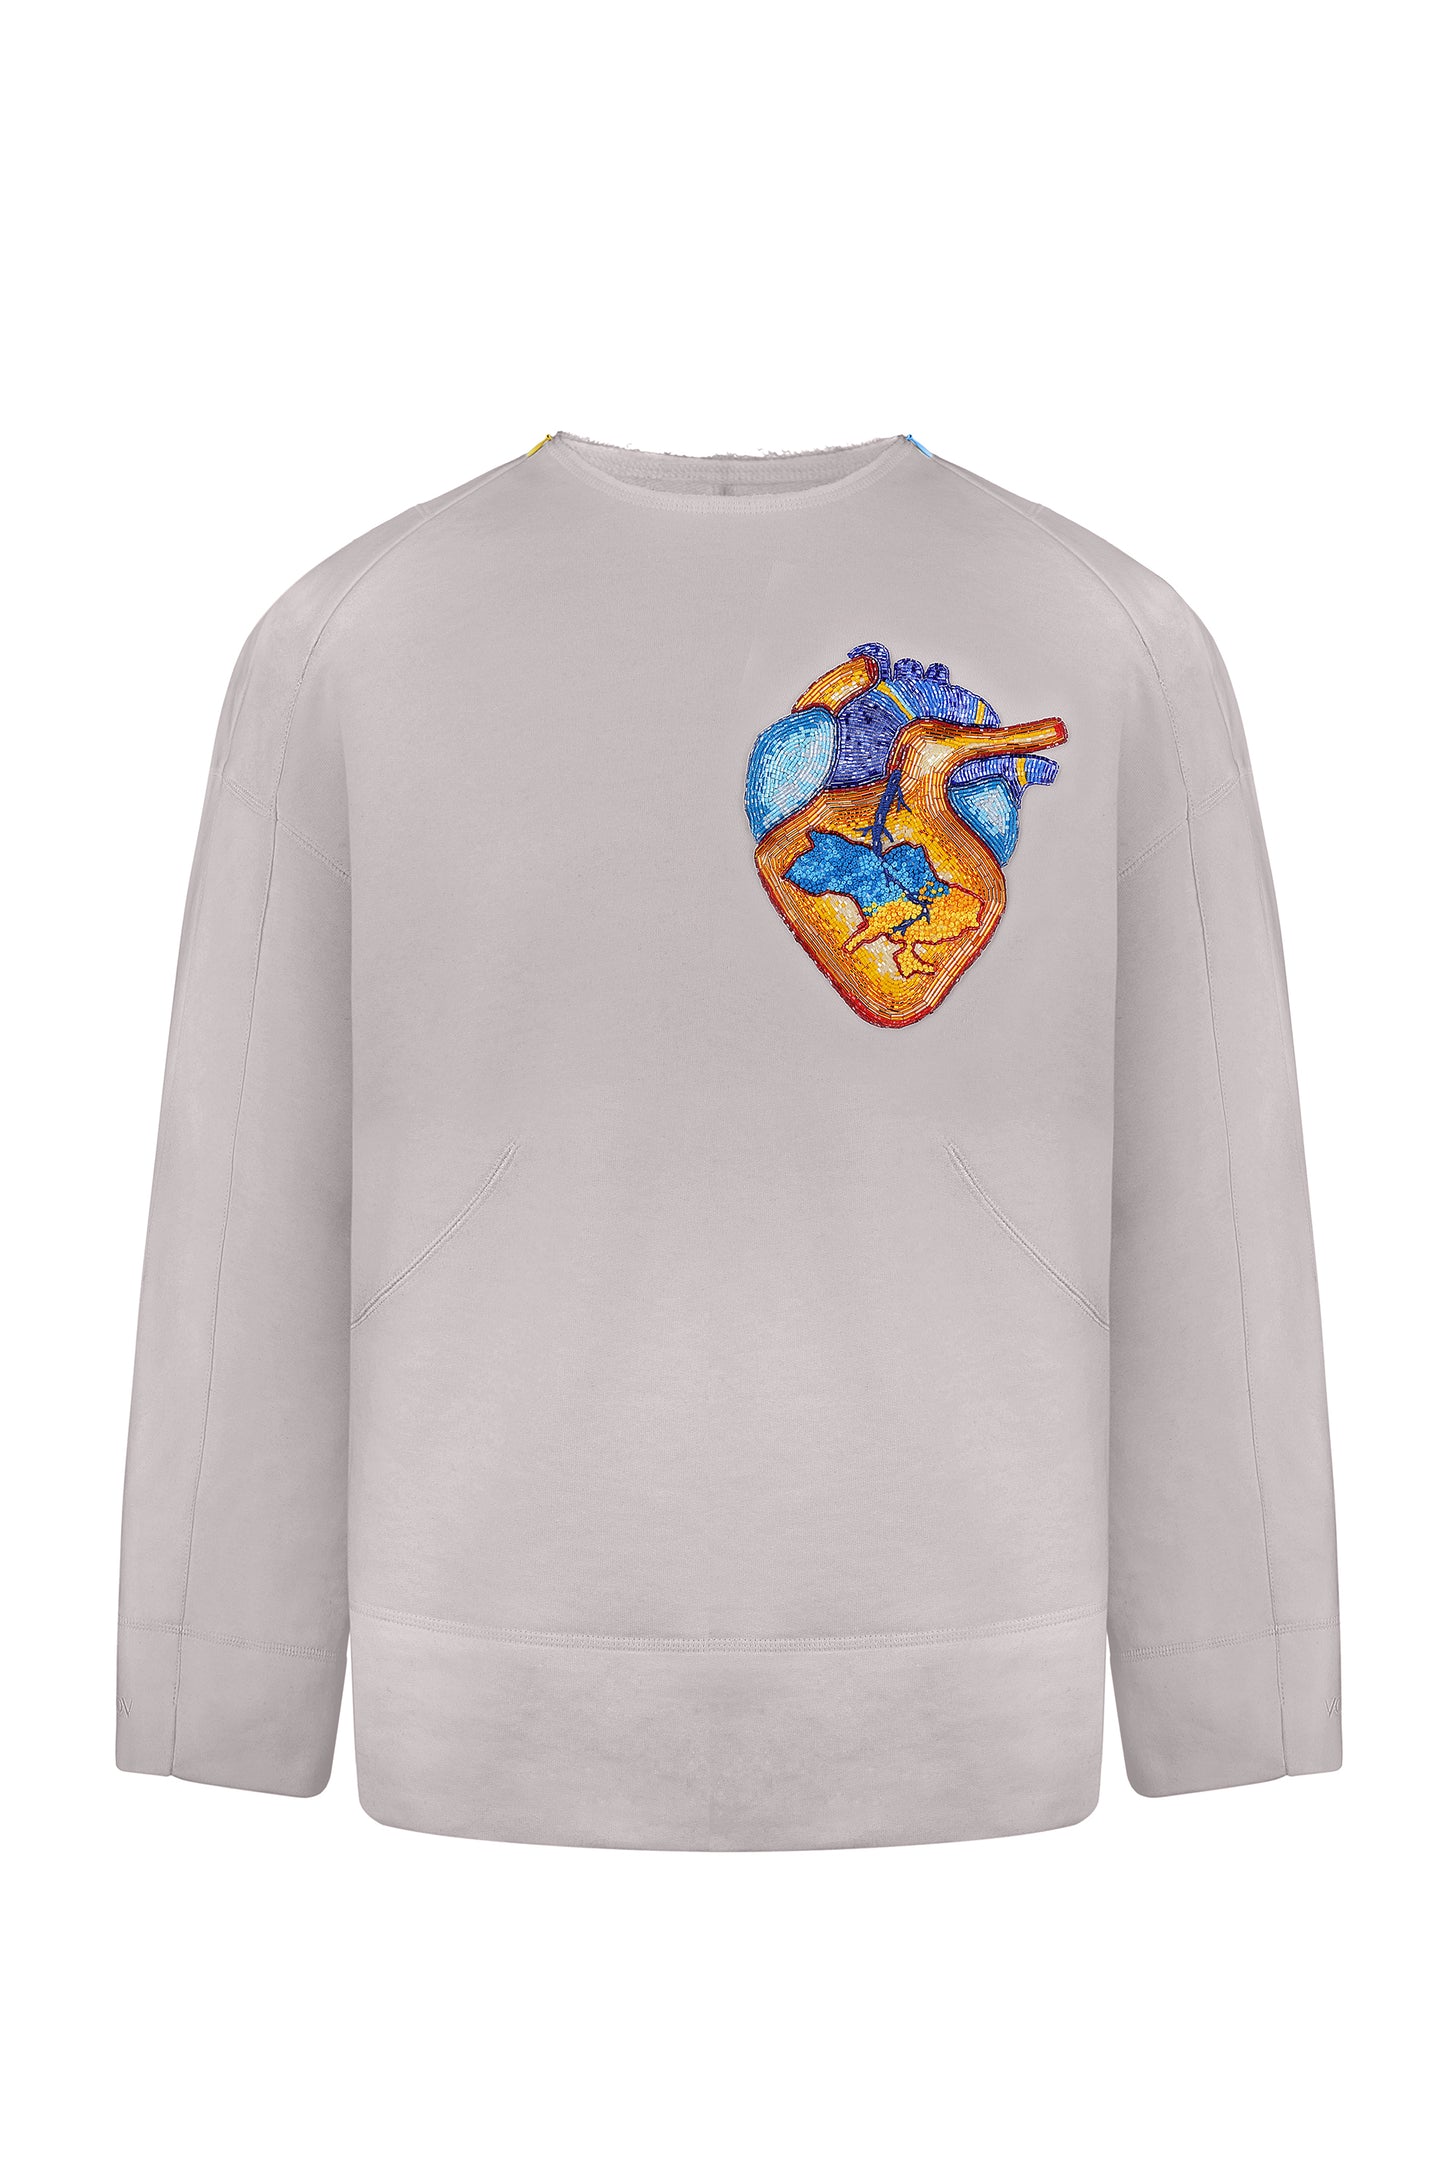 Gray sweatshirt with handmade heart embroidery